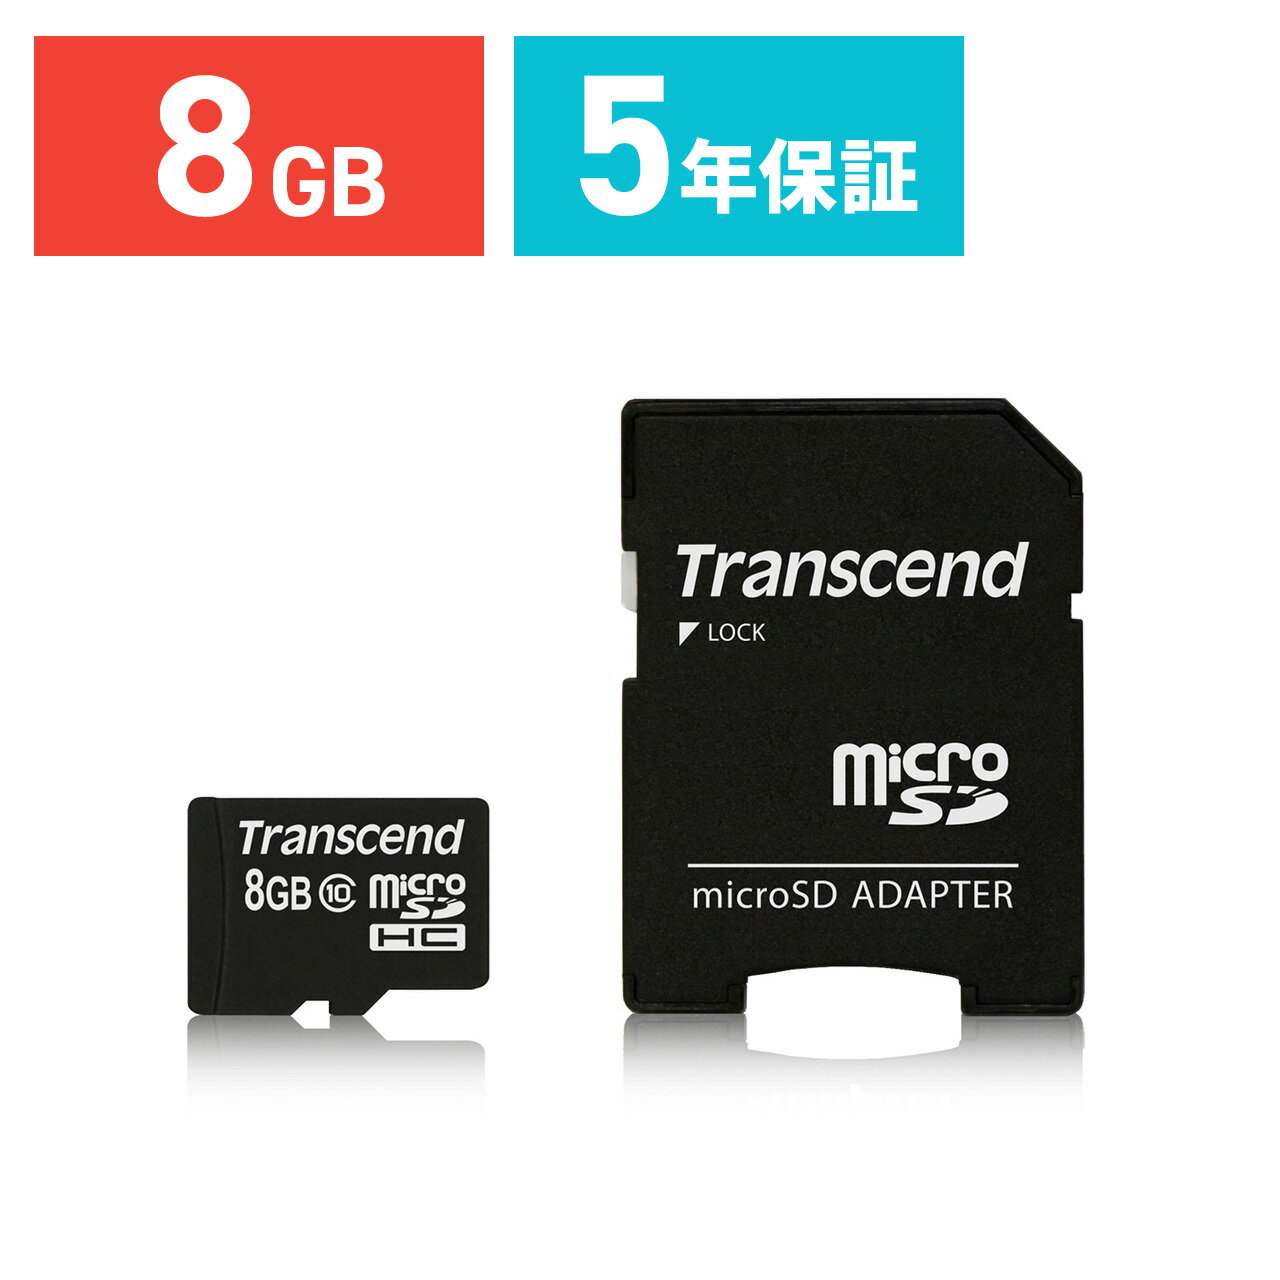 y5/15II100|CgҌ zTranscend microSDJ[h 8GB Class10 5Nۏ }CNSD microSDHC SDA_v^[t NX10 X}z SD w 